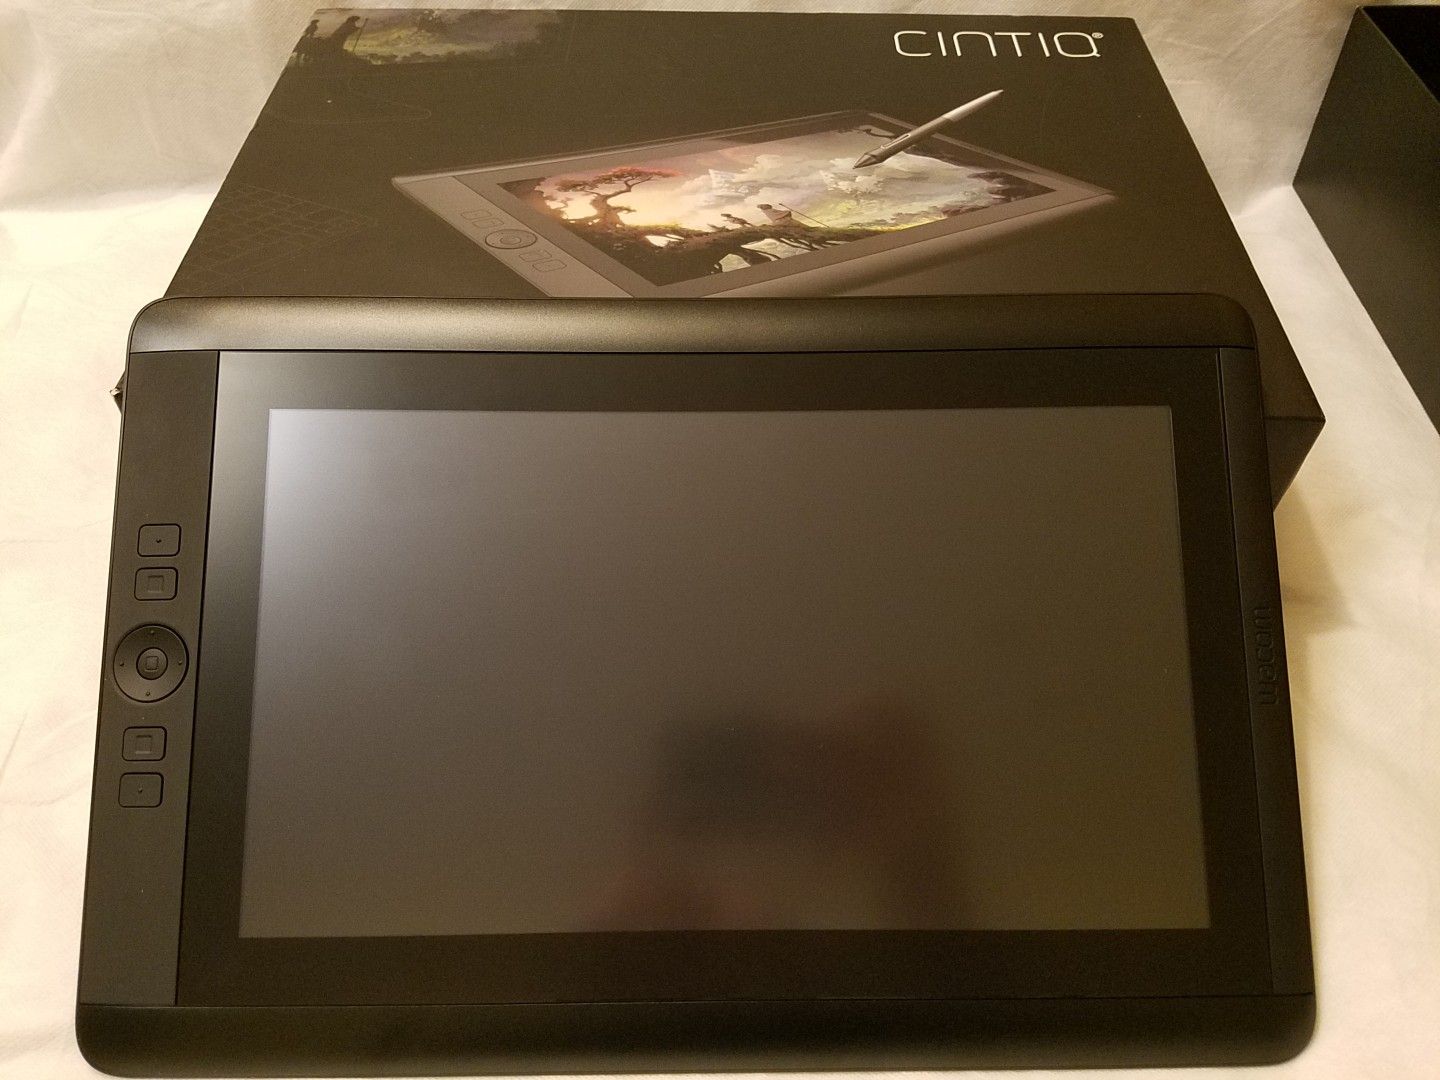 WACOM Cintiq 13hd dtk1300 dtk1301 art tablet monitor